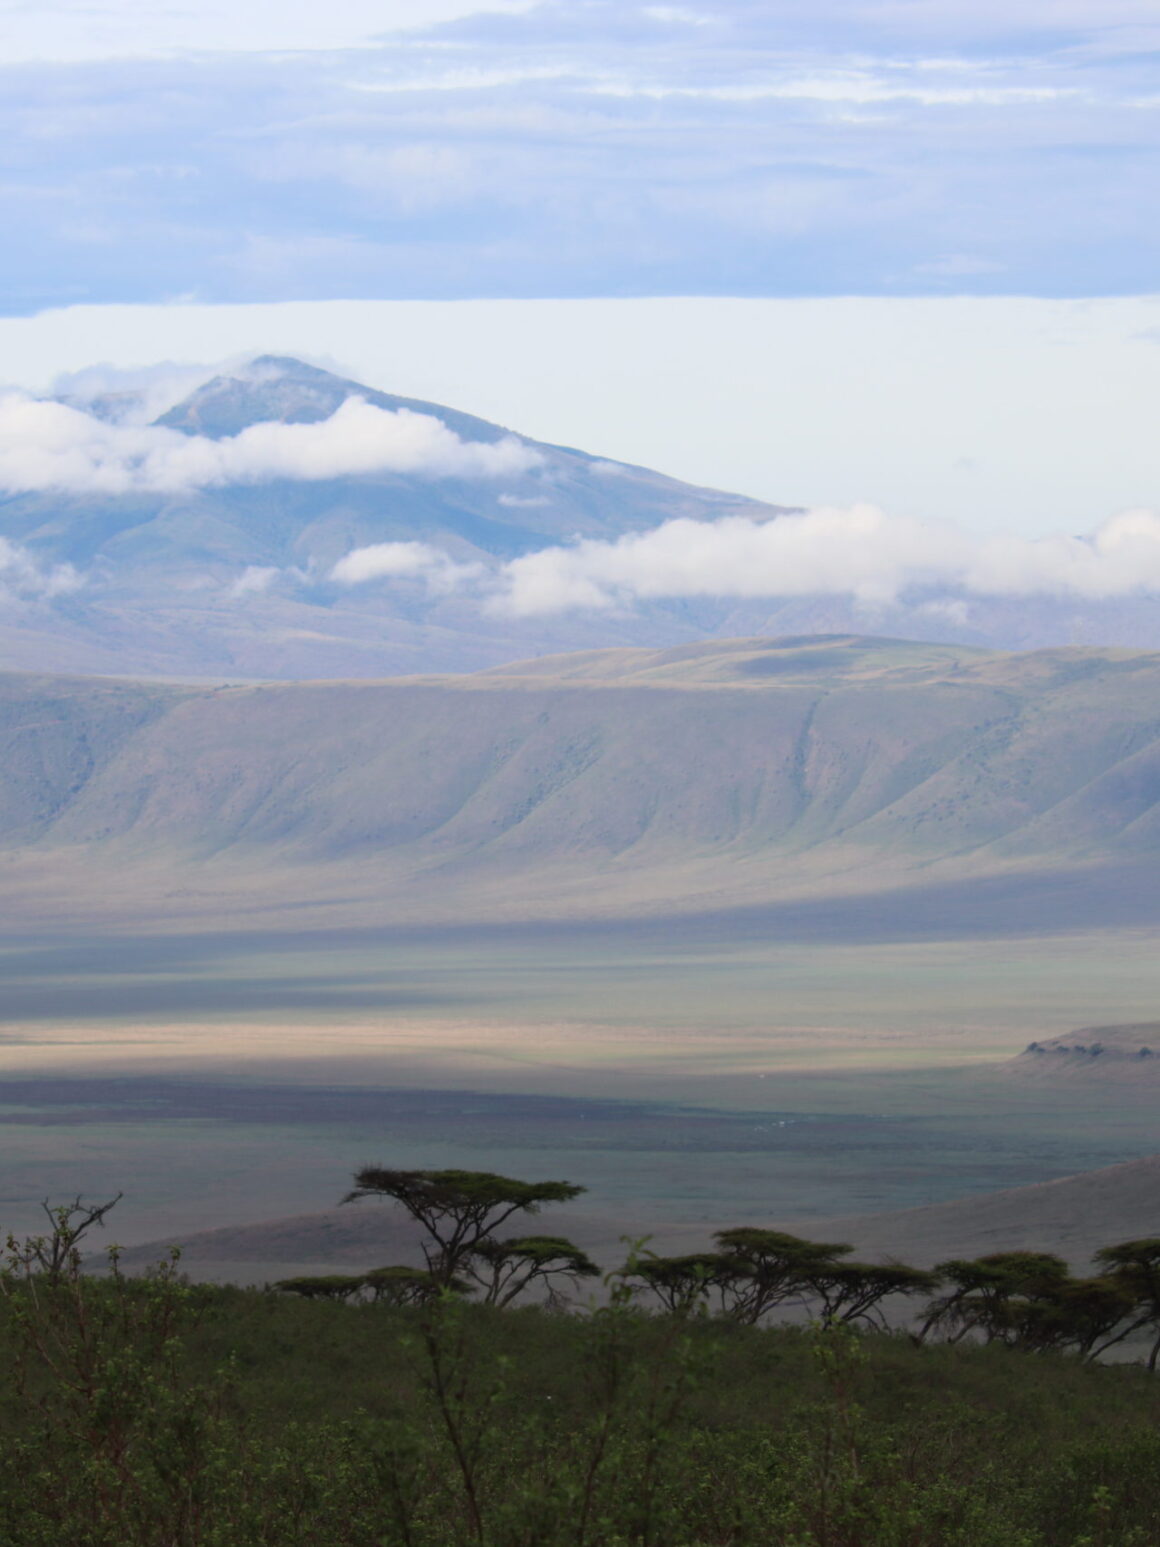 The Ngorongoro Crater of Tanzania